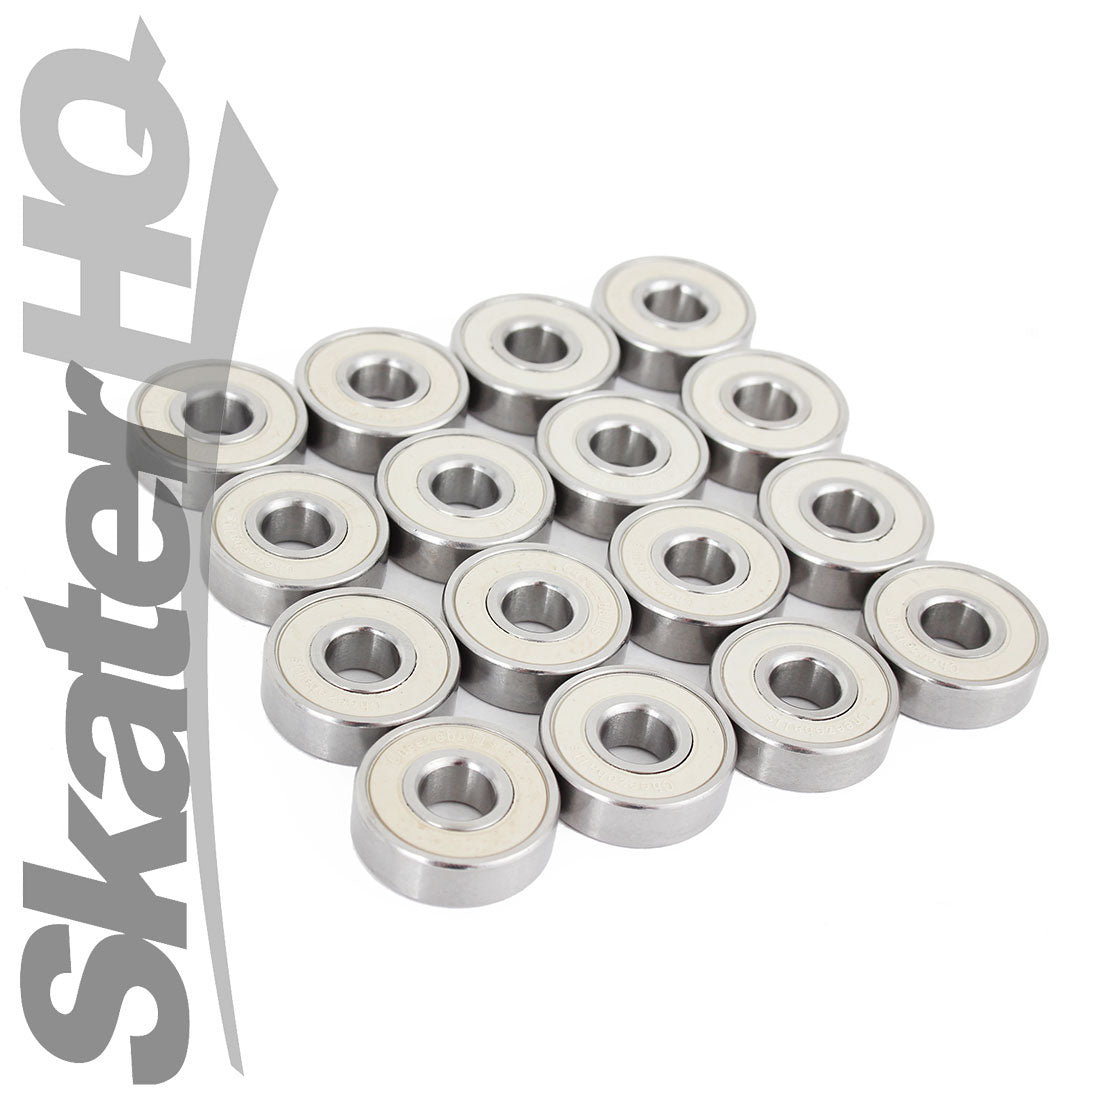 Cheezeballs Swiss Ceramic 8mm Bearings - 16pk Inline and Quad Bearings